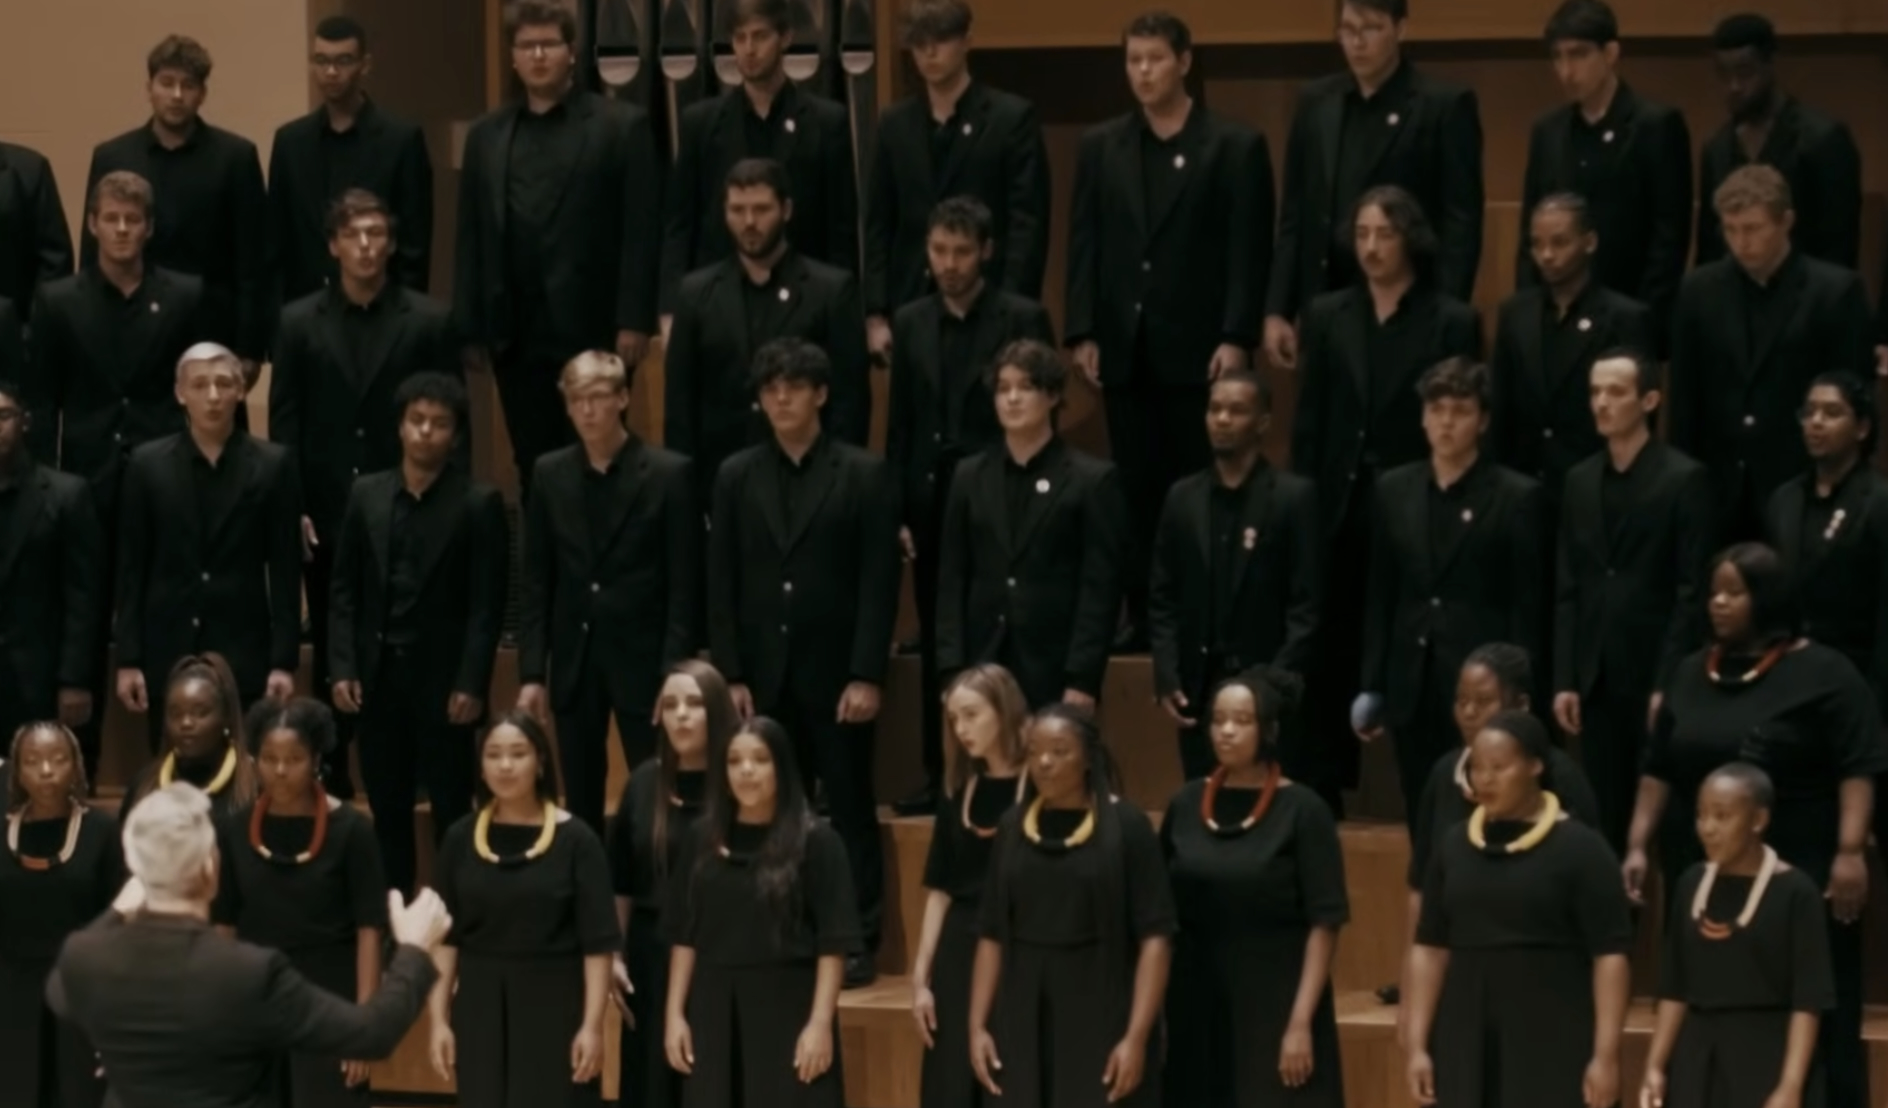 A Christmas Gift: Stellenbosch University Choir's "One Hundred Thousand Songs"